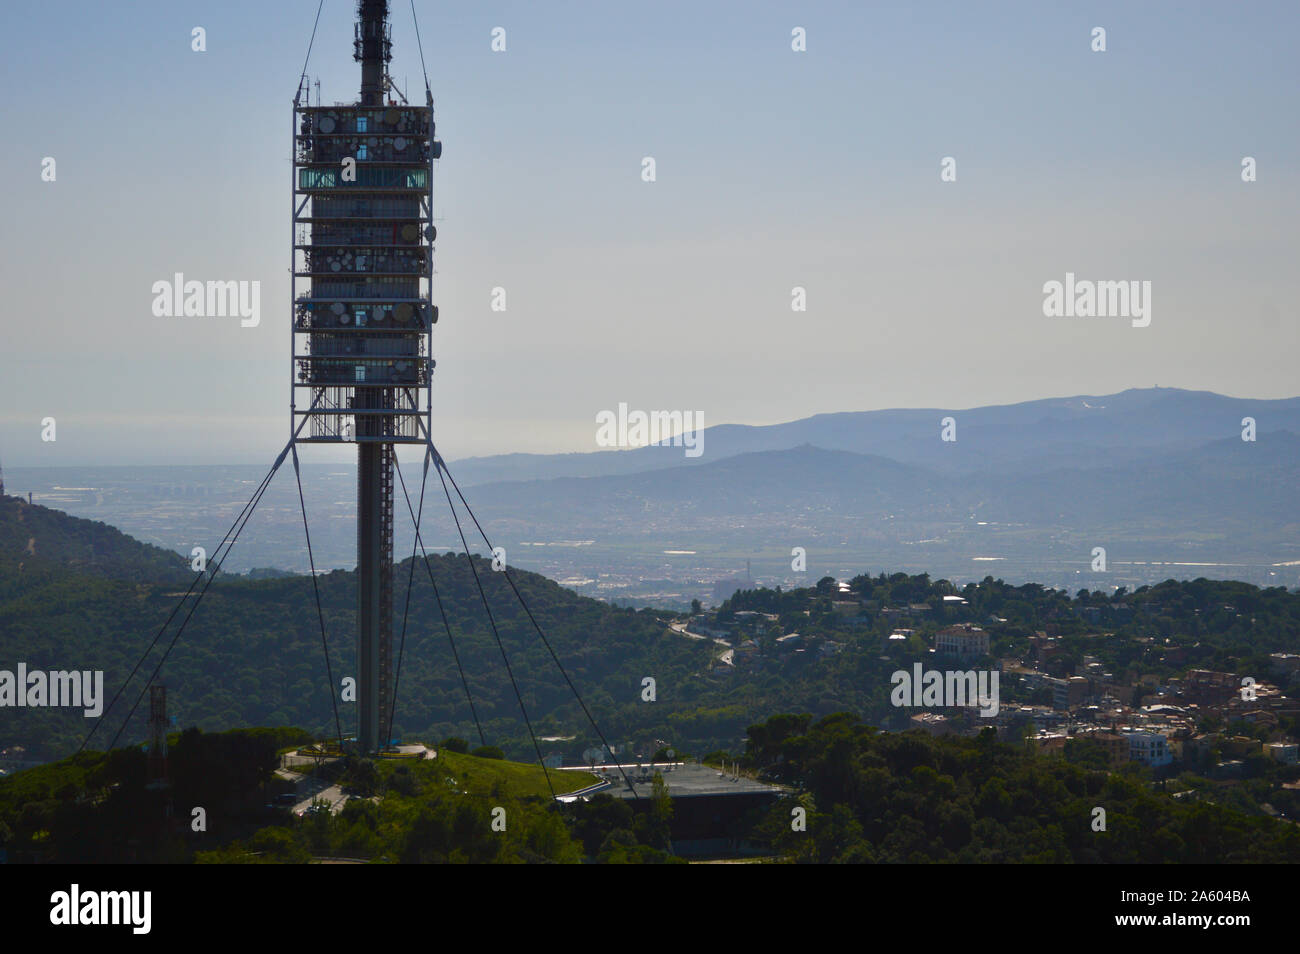 The Torre de Collserola telecommunications tower viewed from Tibidabo in Barcelona, Spain Stock Photo